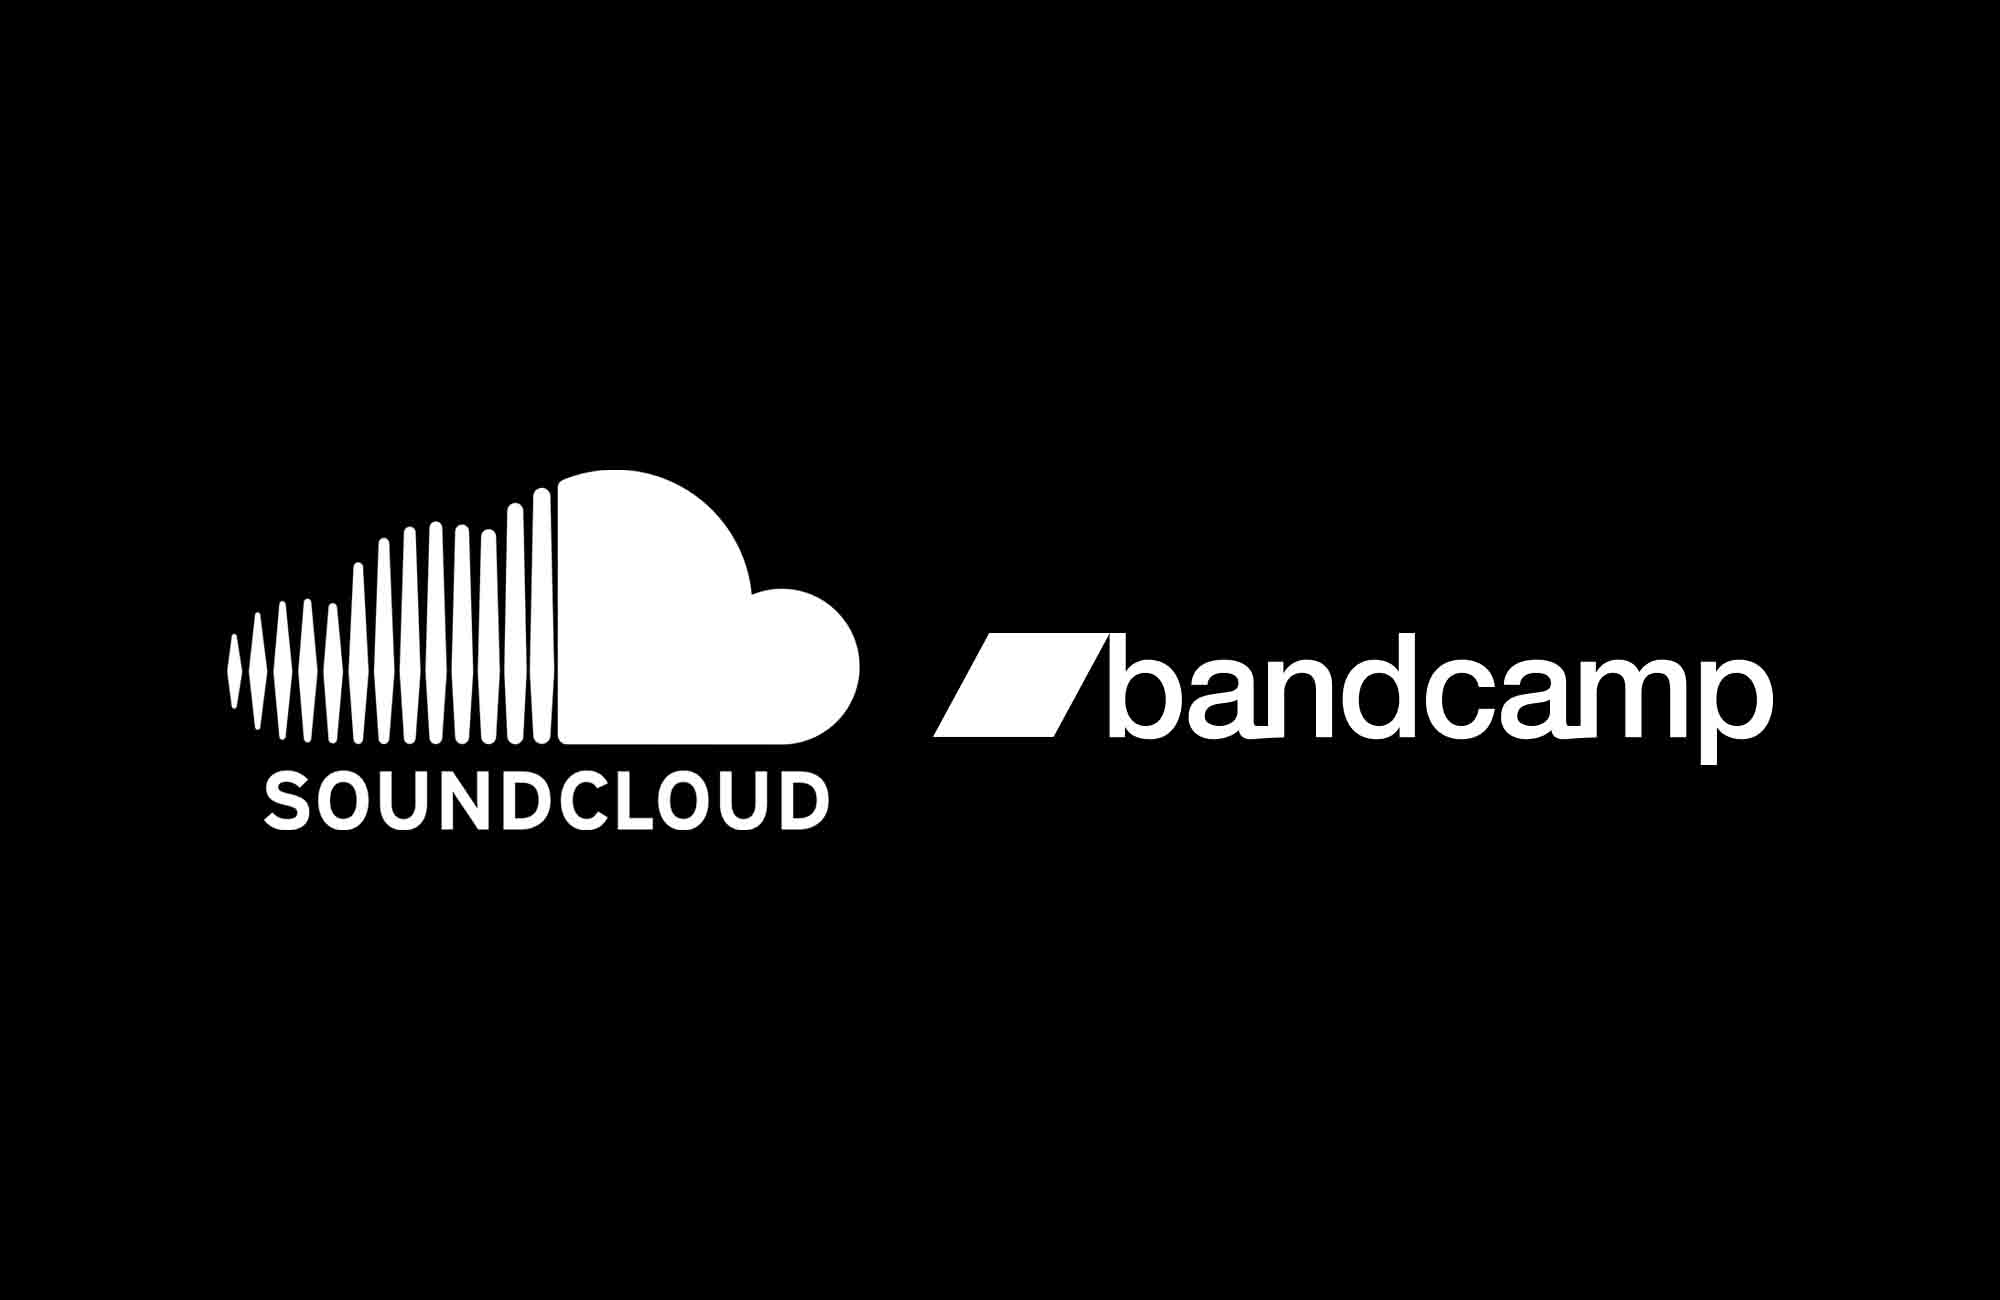 SoundCloud vs. BandCamp